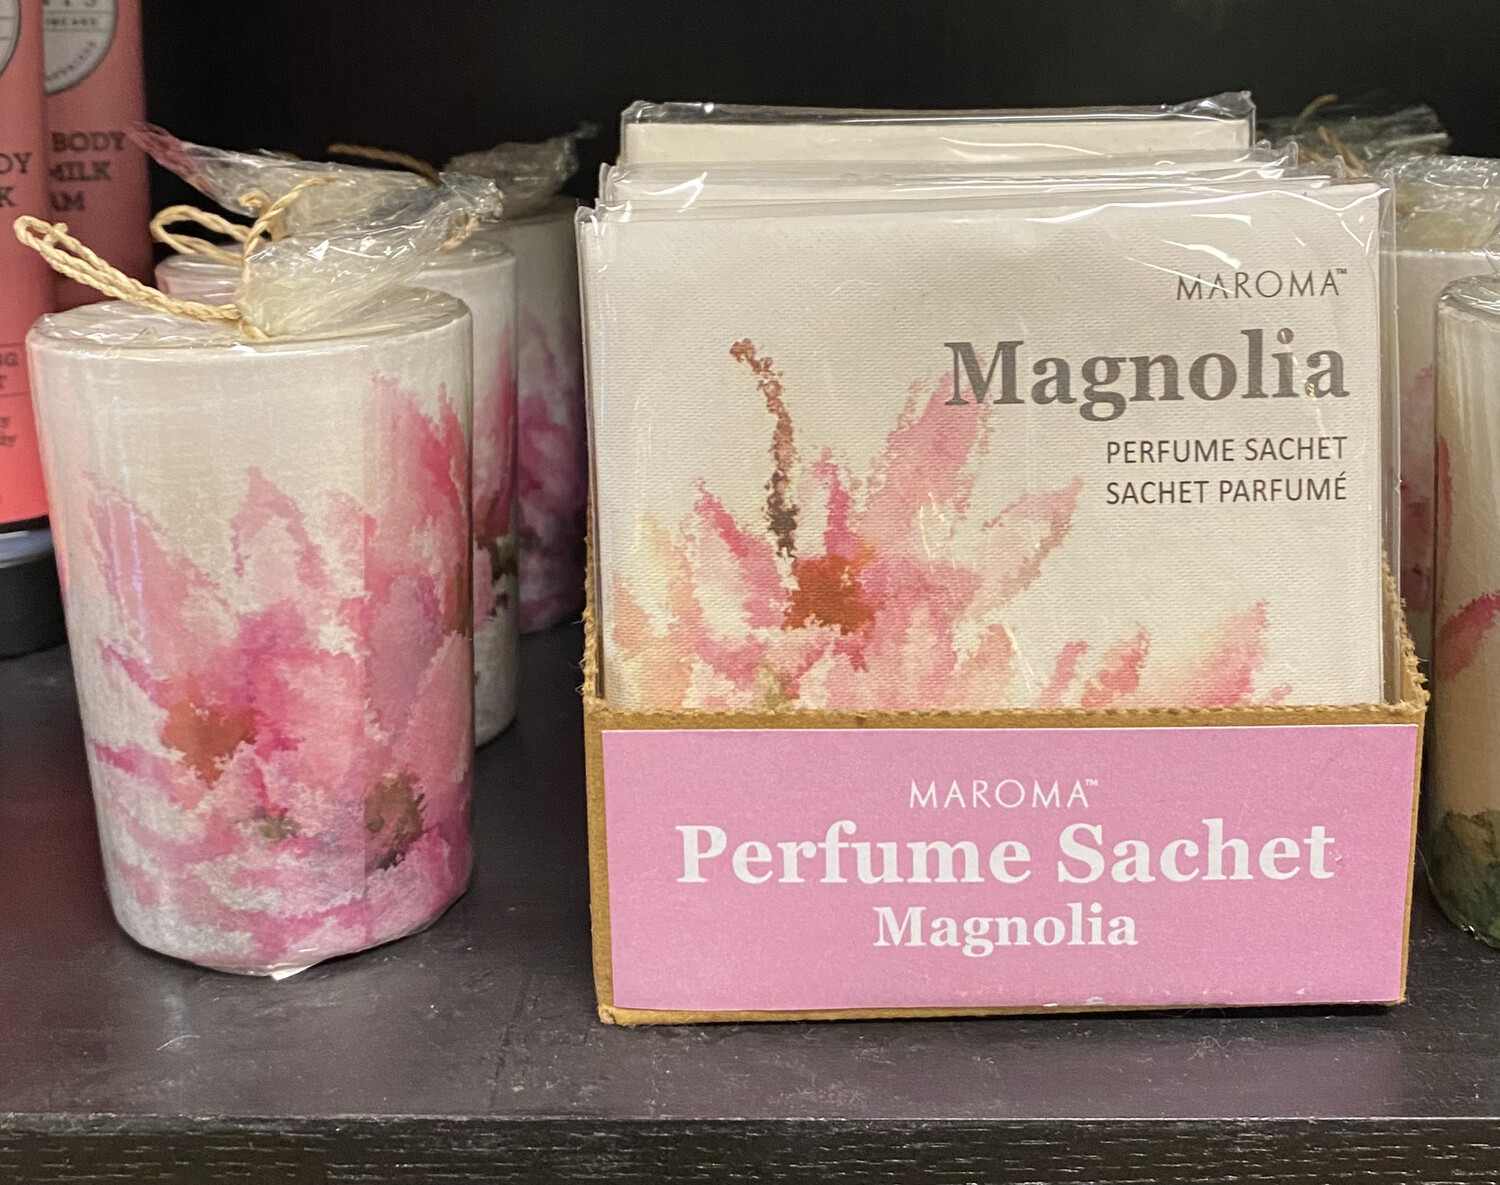 Maroma Magnolia Flower Sachet Matching Candle Available